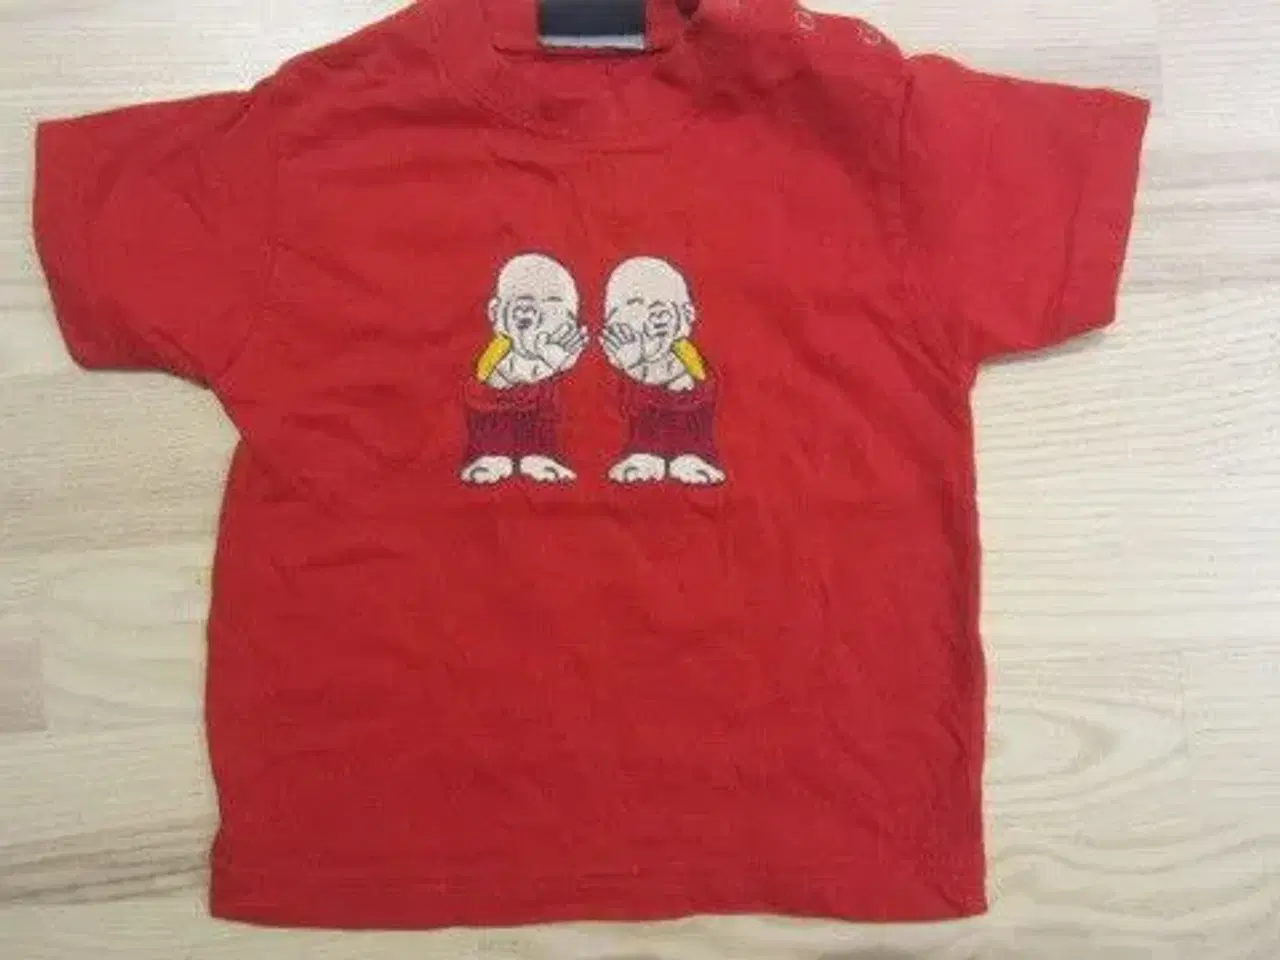 Billede 1 - Str. 1 år, rød t-shirt